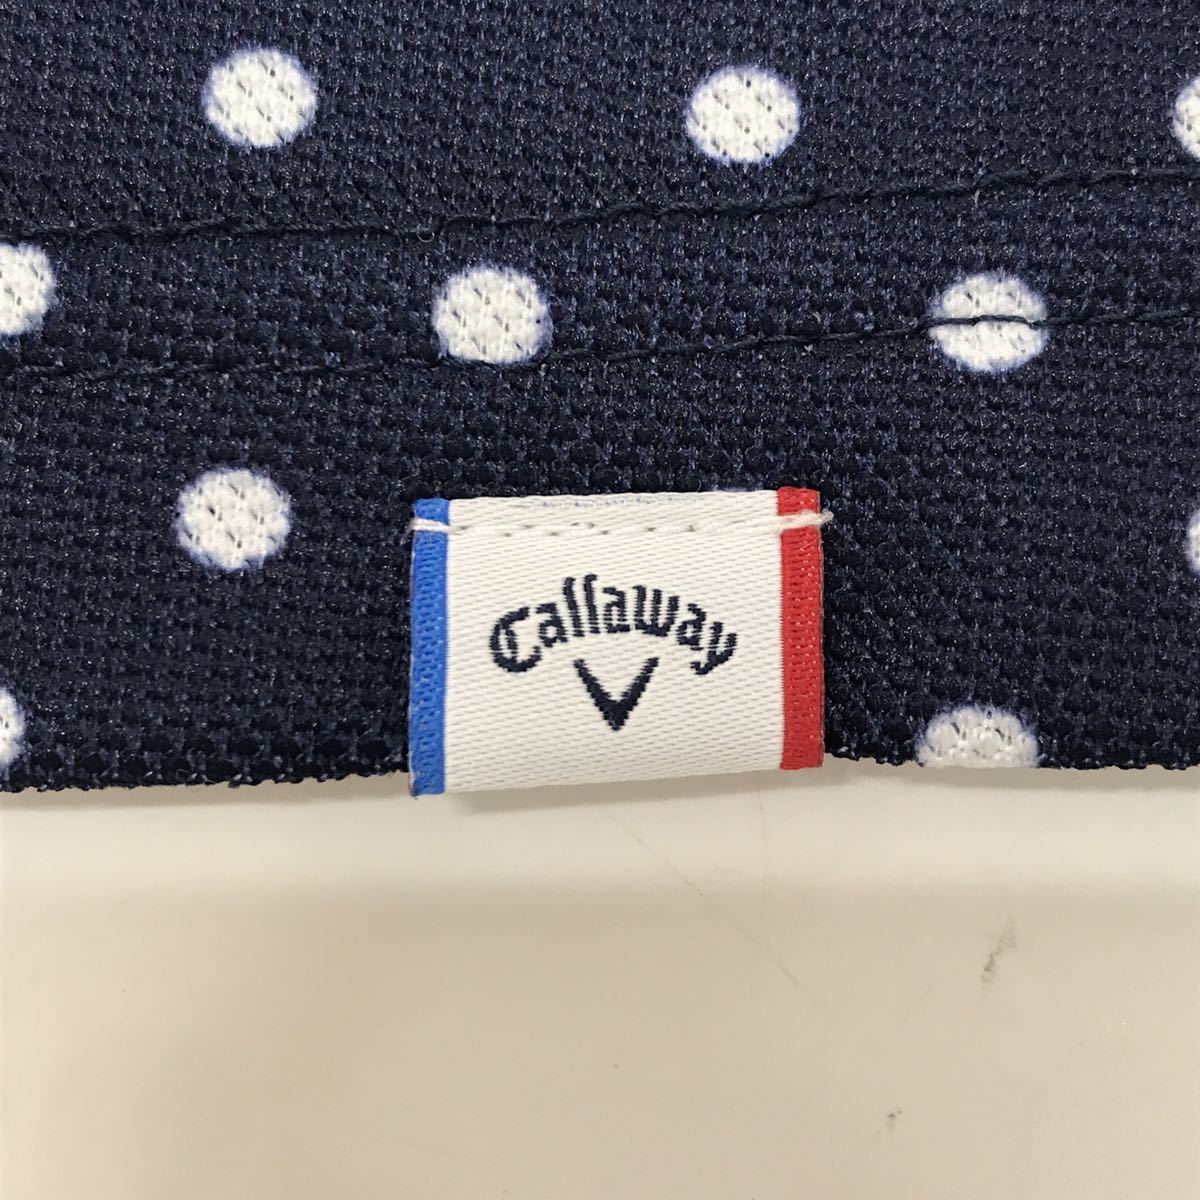 [USED]Callaway Callaway полиэстер с высоким воротником рубашка с коротким рукавом точка рисунок темно-синий темно-синий женский L Golf одежда 